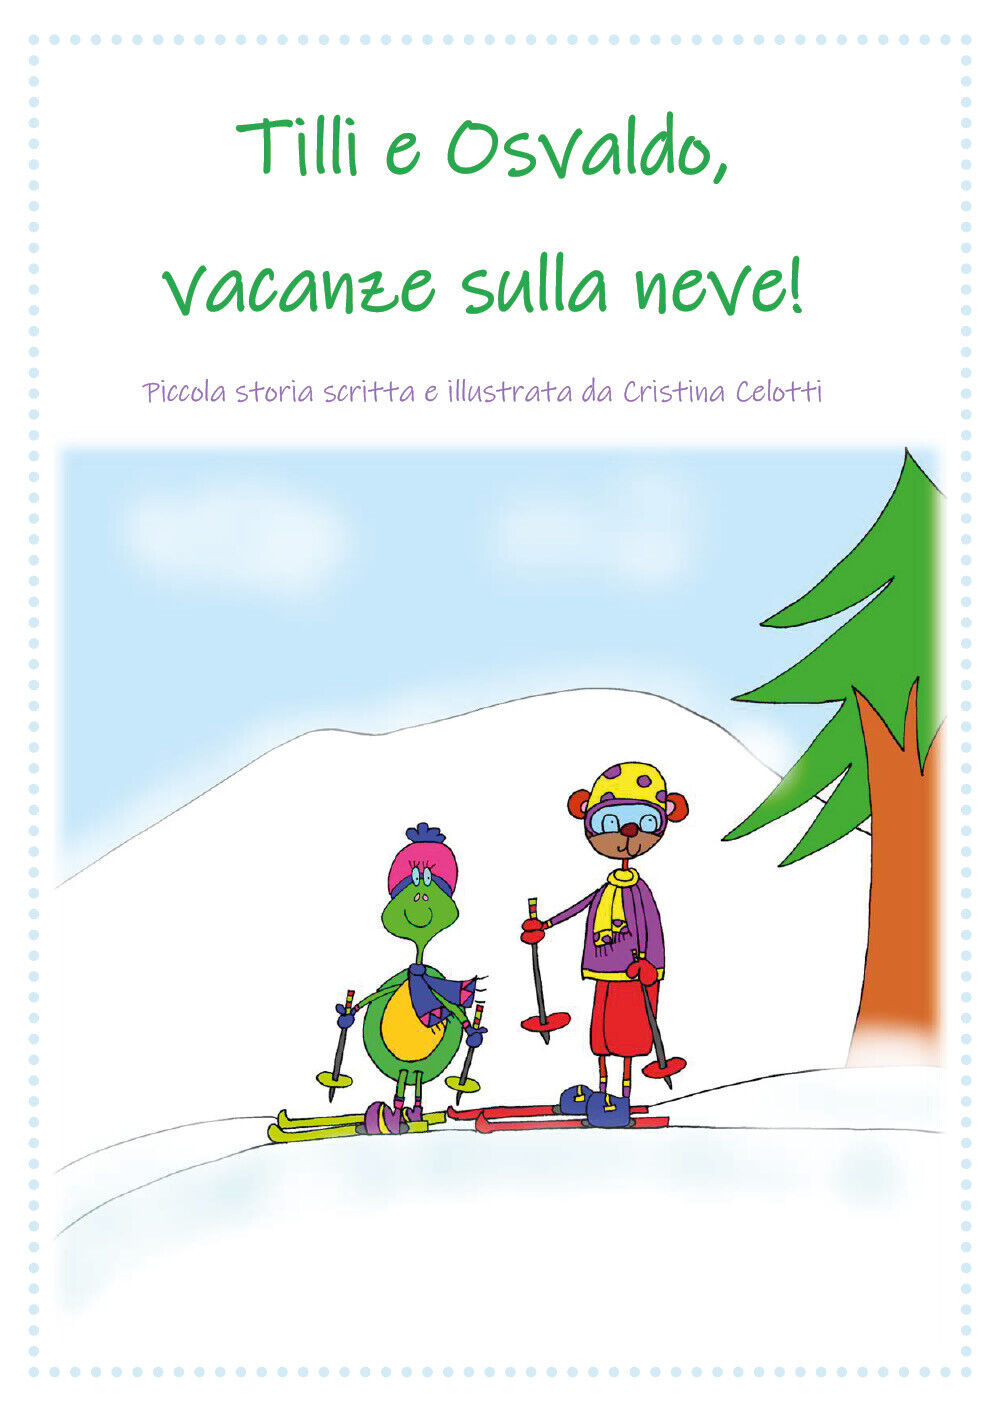 Tilli e Osvaldo, vacanze sulla neve! di Cristina Celotti,  2021,  Youcanprint